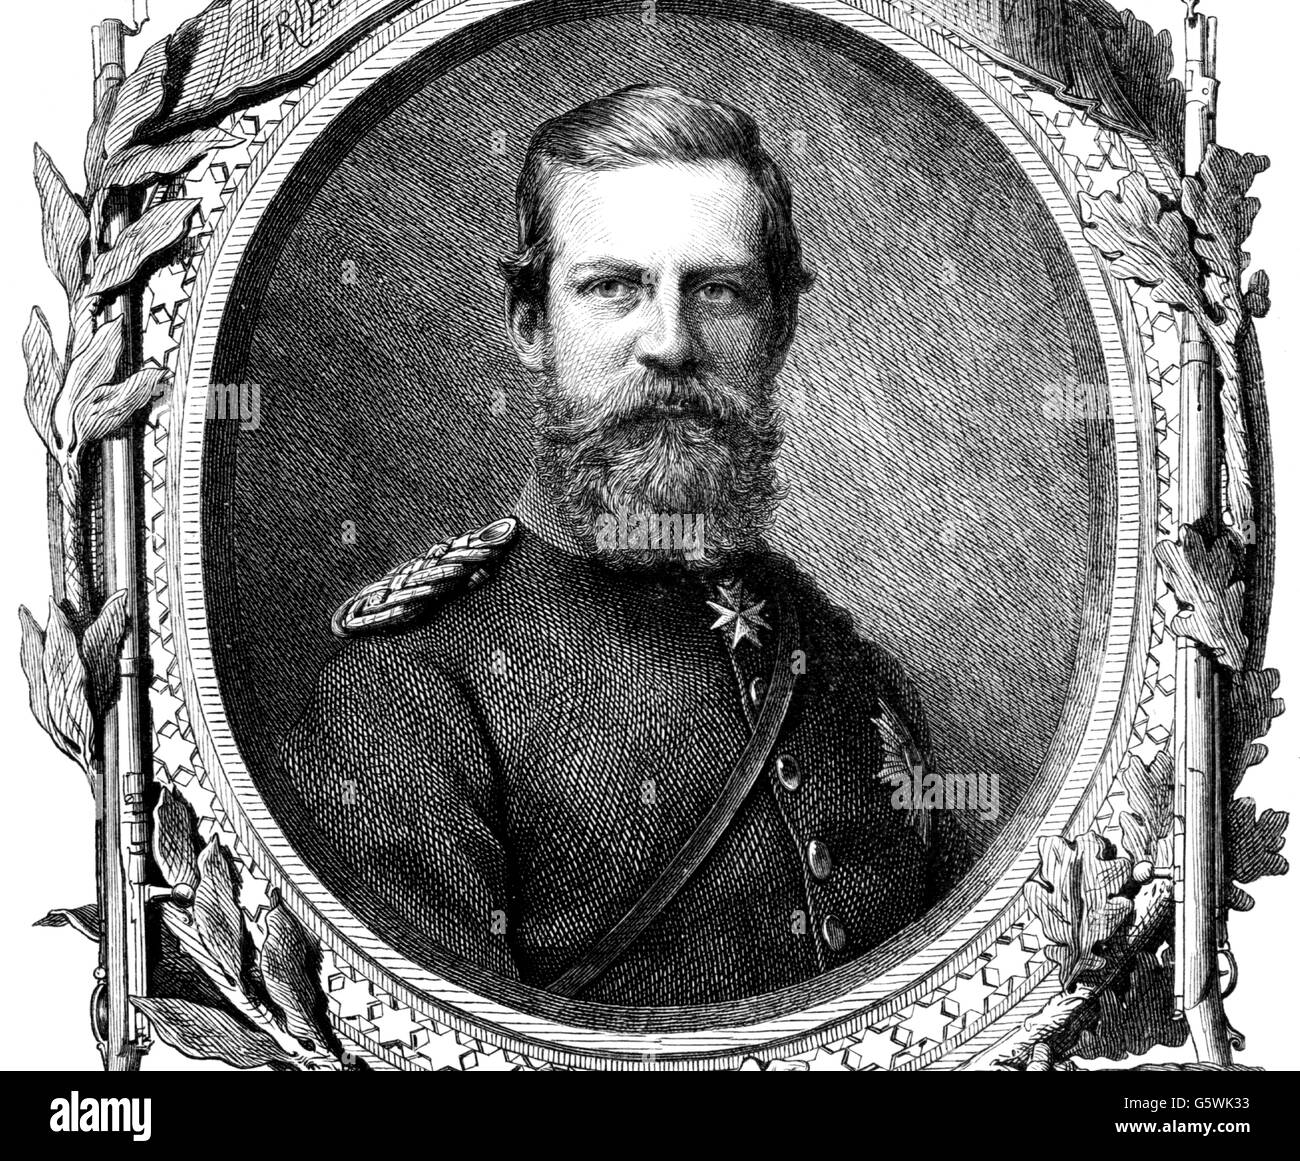 Frederick III, 18.10.1831 - 15.6.1888, German Emperor 9.3. - 15.6.1888, portrait, wood engraving, circa 1865, Stock Photo